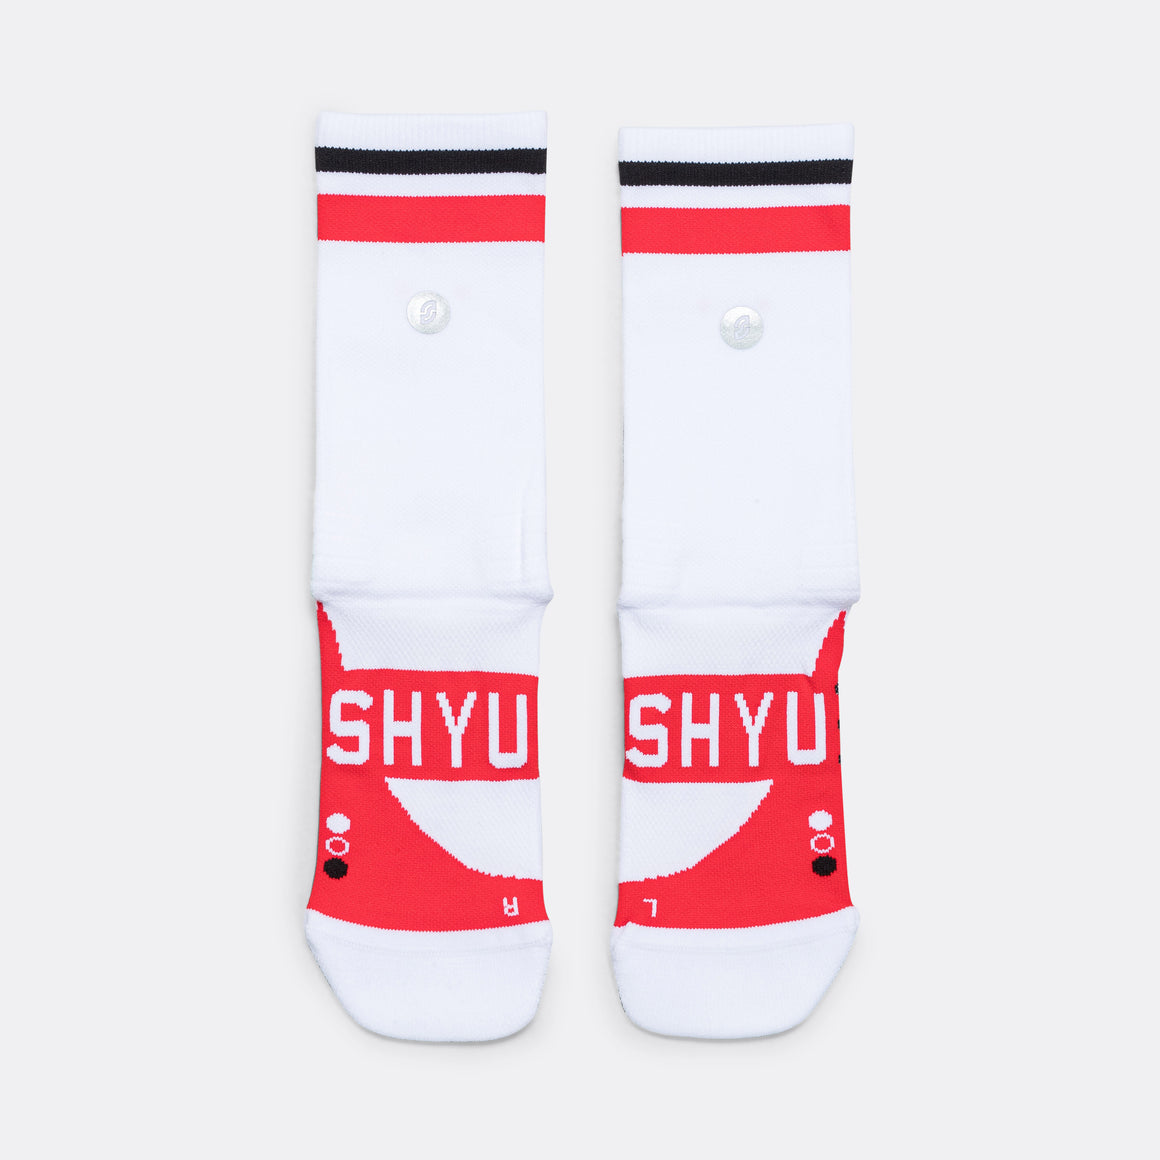 Shyu - Half Crew Racing Socks - White/Red/Black - Up There Athletics